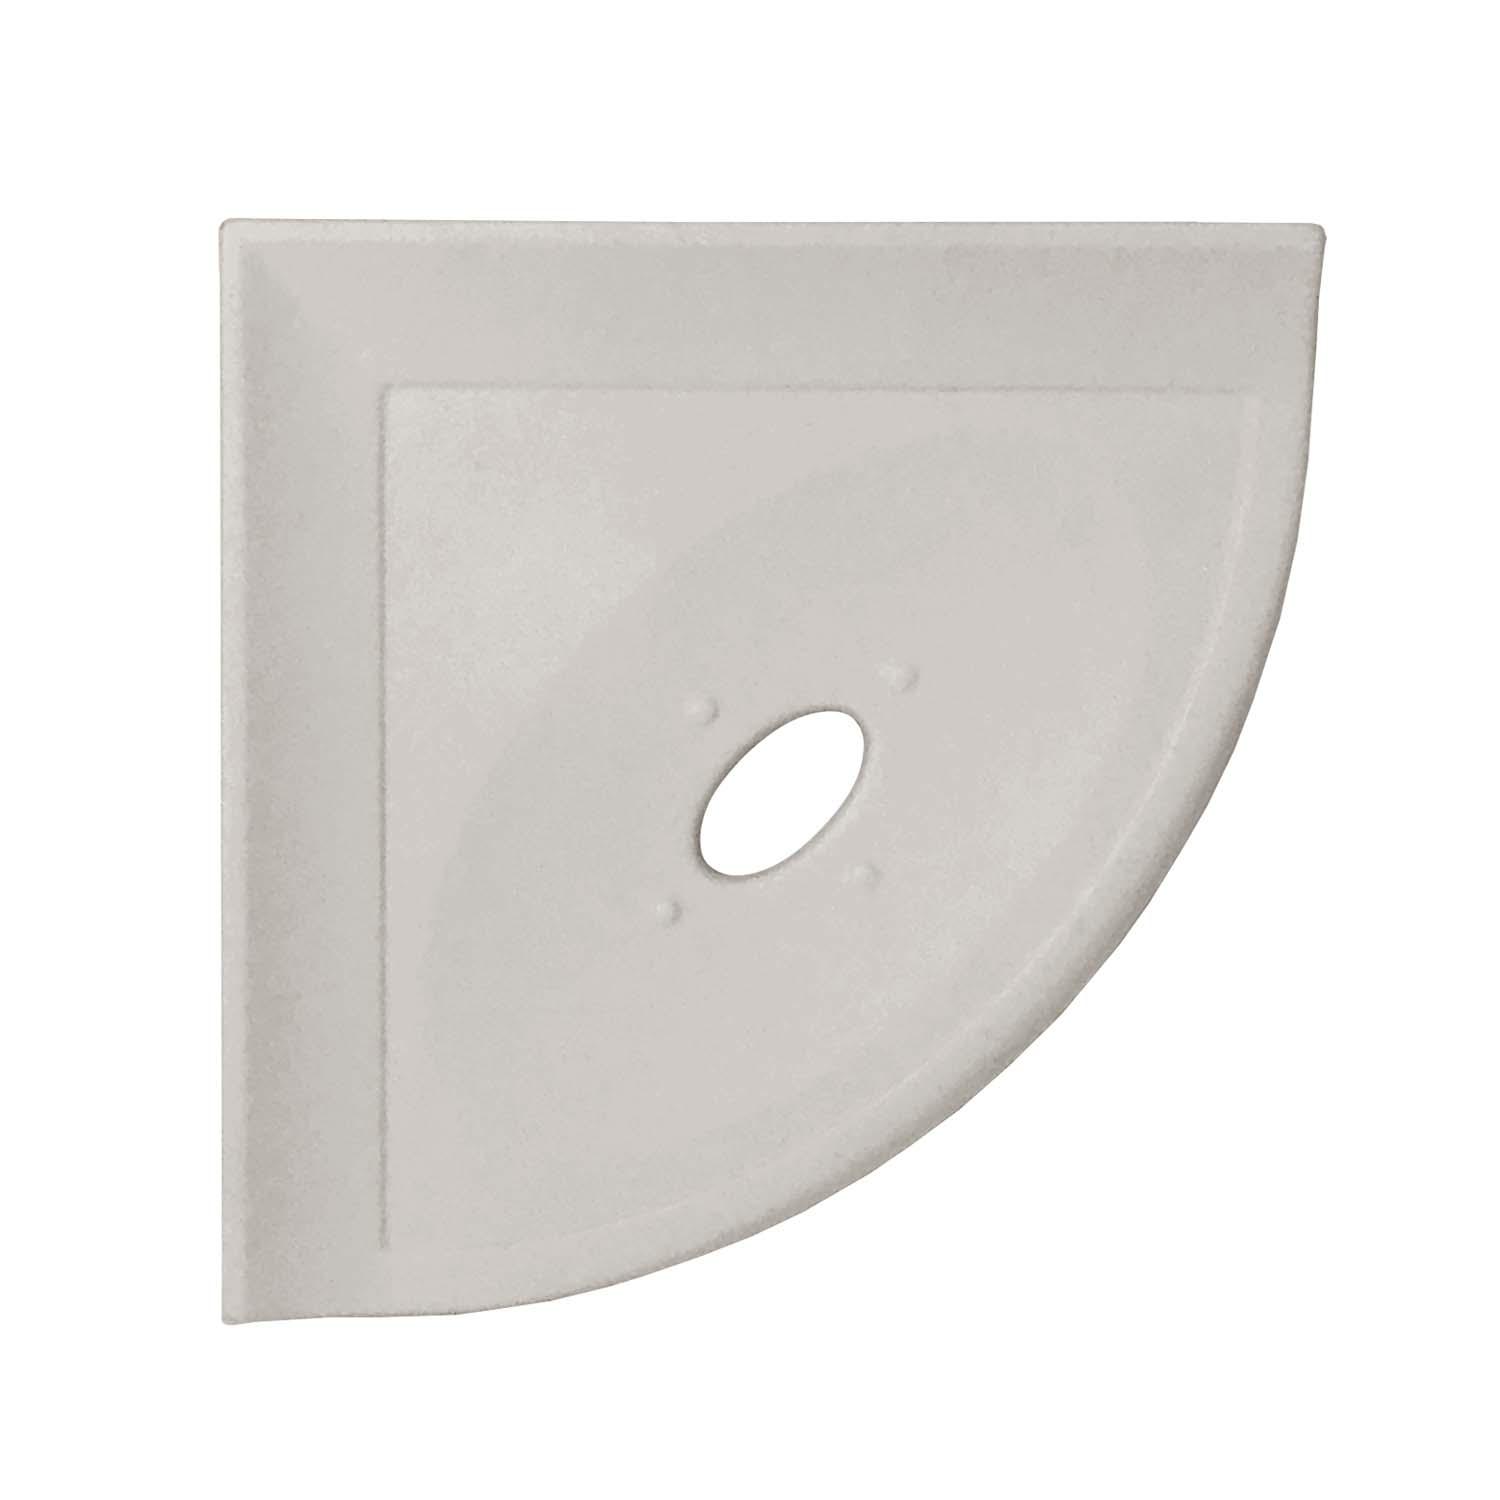 Questech Decor Shower Soap Dish, Retrofit Corner Shower Shelf for Tiled  Shower Walls, Bathroom Storage, 5 Inch Geo Flatback Shower Caddy, Bright  White